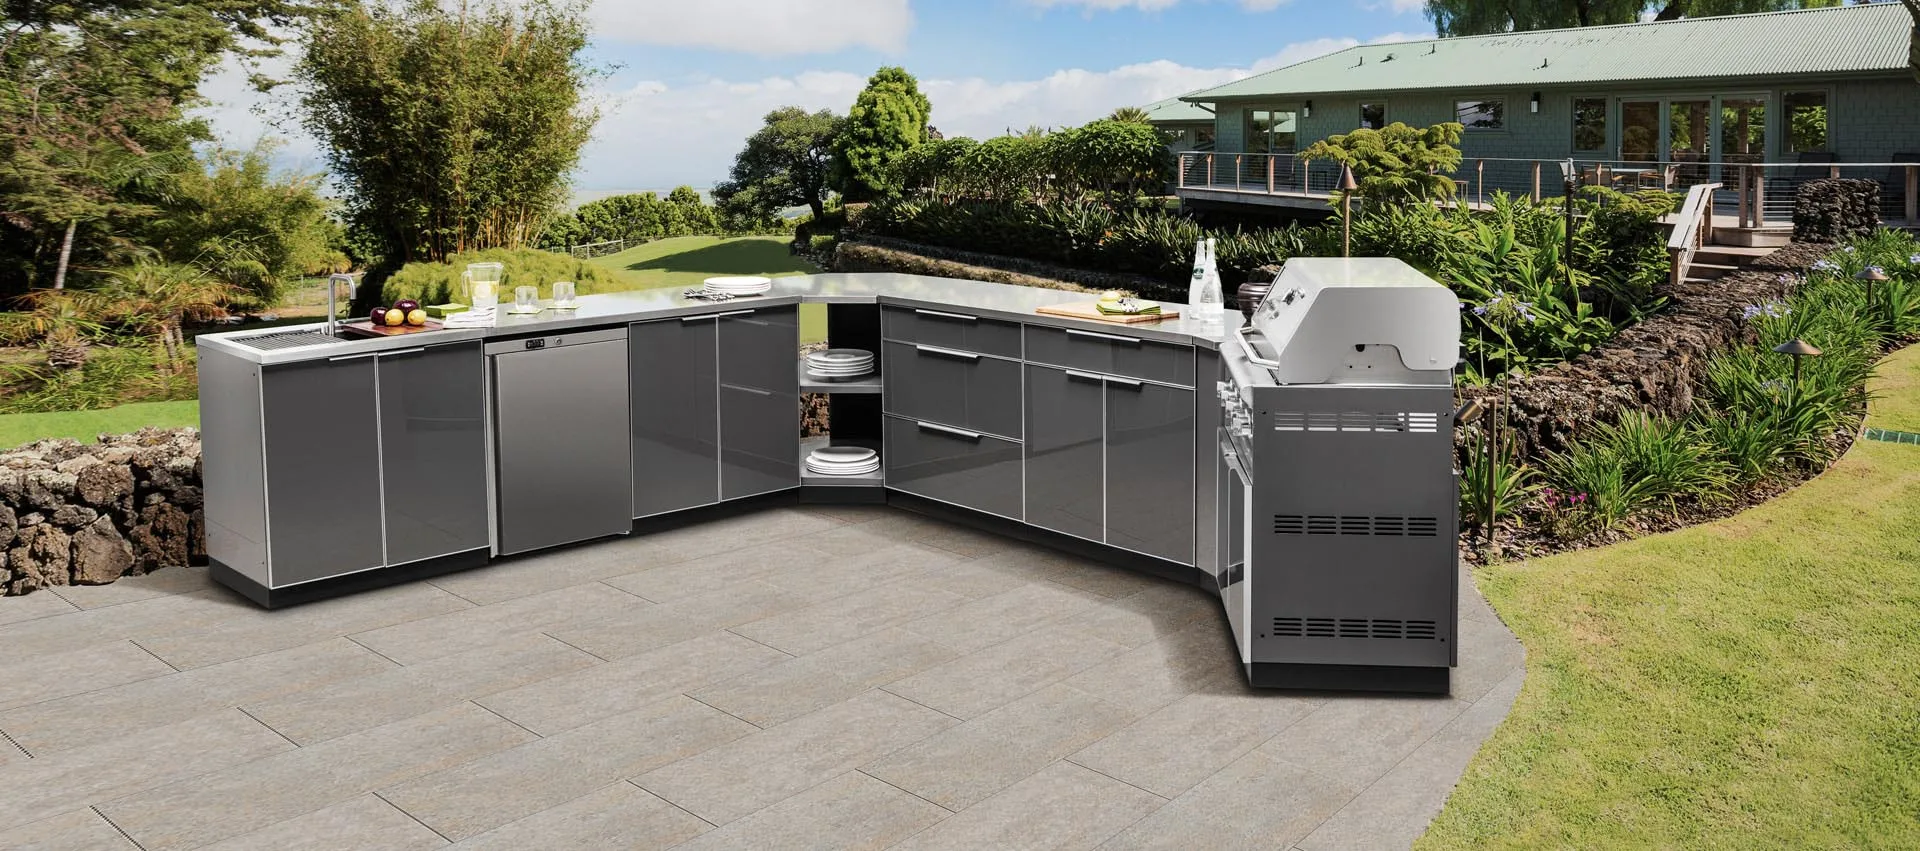 2019 Vermont Modular Outdoor Kitchens Stainless Steel Bbq Grill Furniture